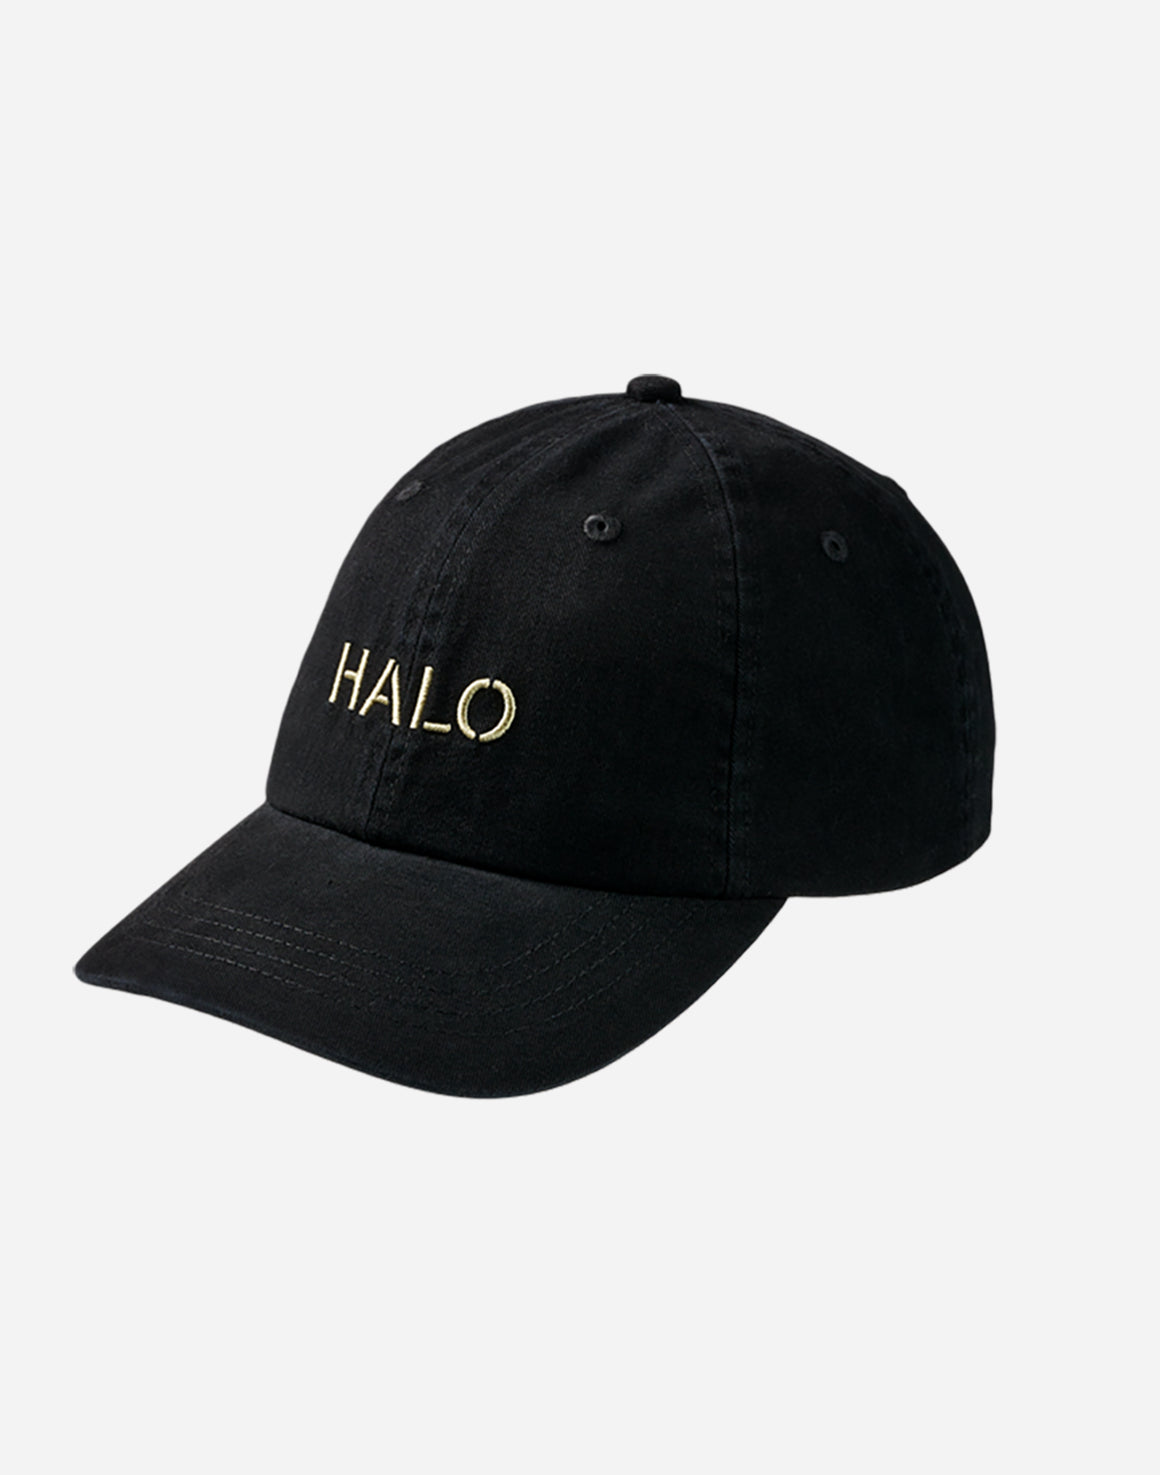 Halo Cotton Cap - Sort - HALO - Kul og Koks